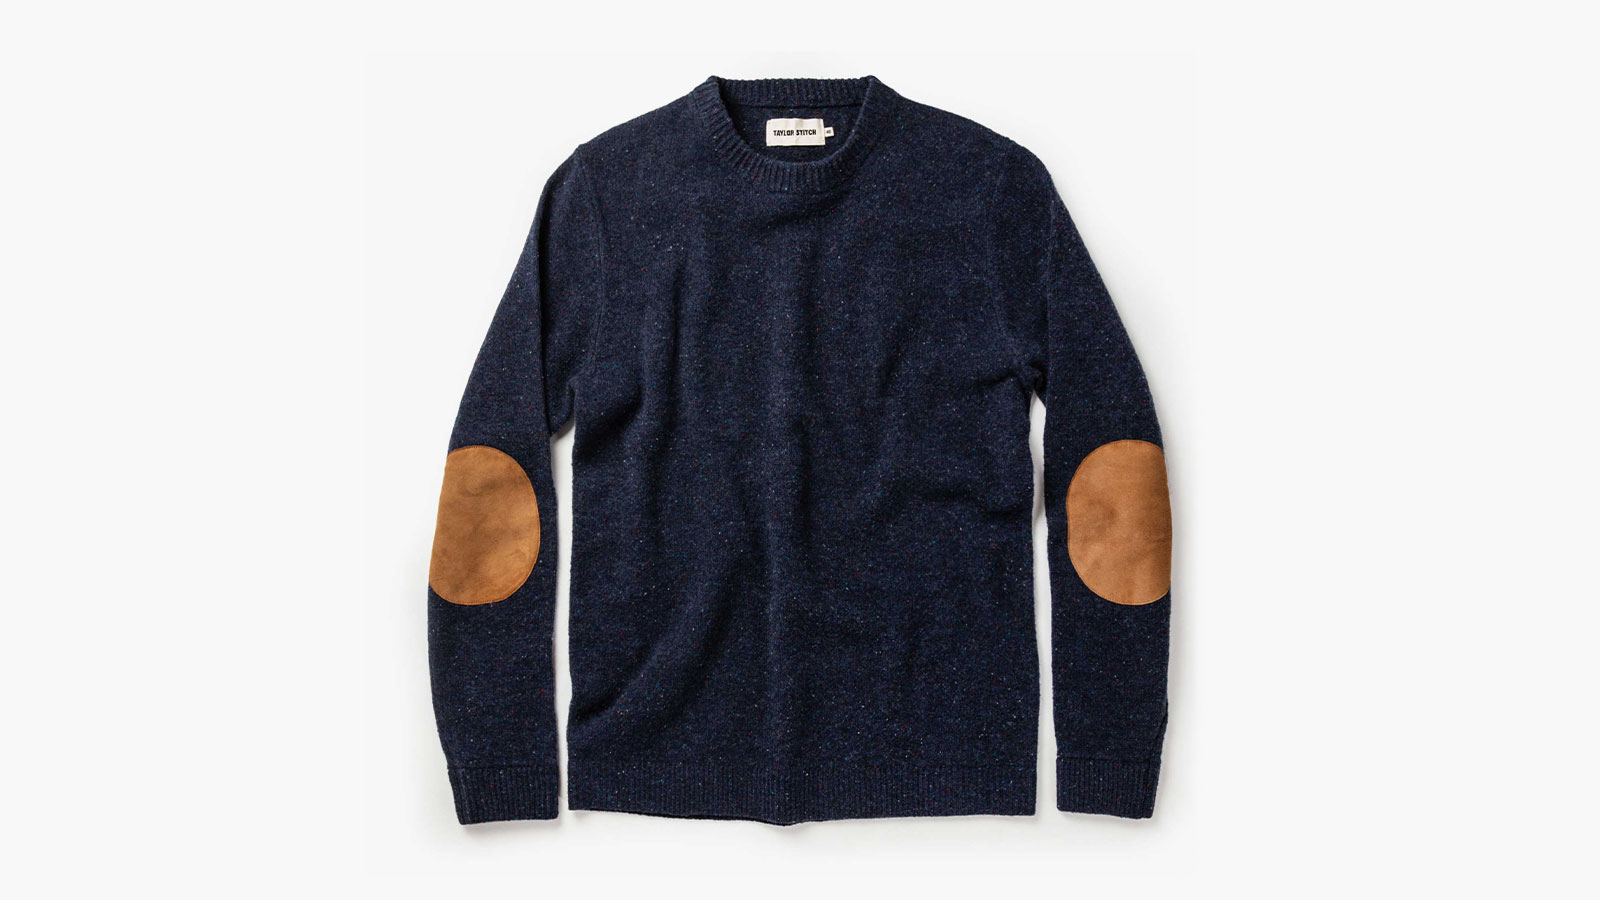 Taylor Stitch Hardtack Sweater